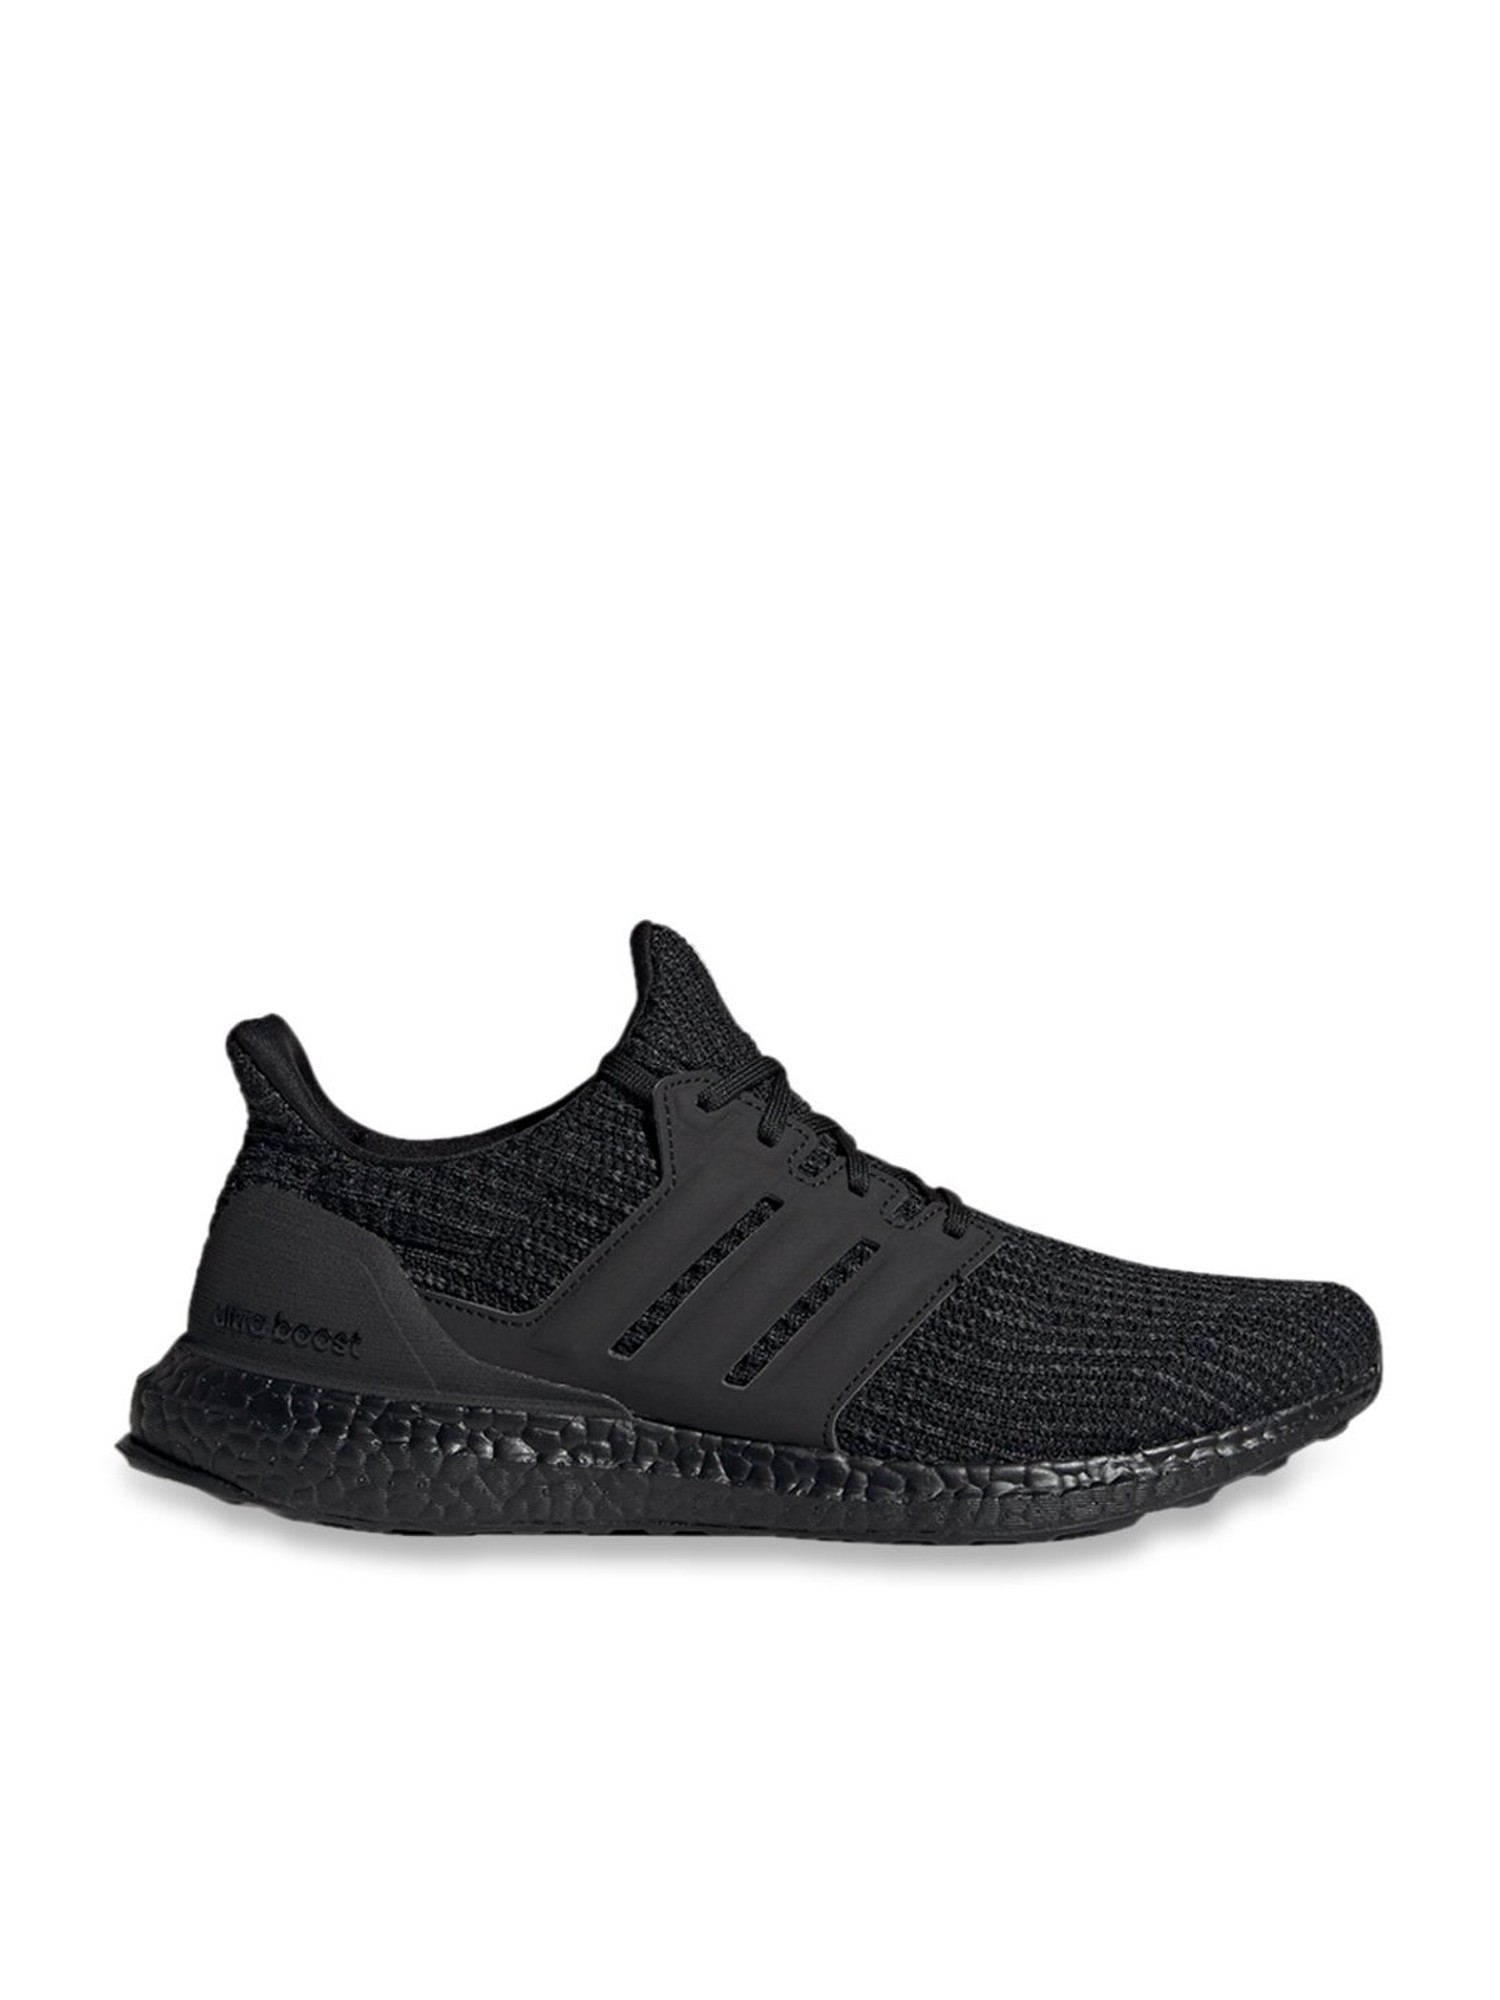 Adidas Men's ULTRABOOST 4.0 DNA Charcoal Black Running Shoes-adidas ...